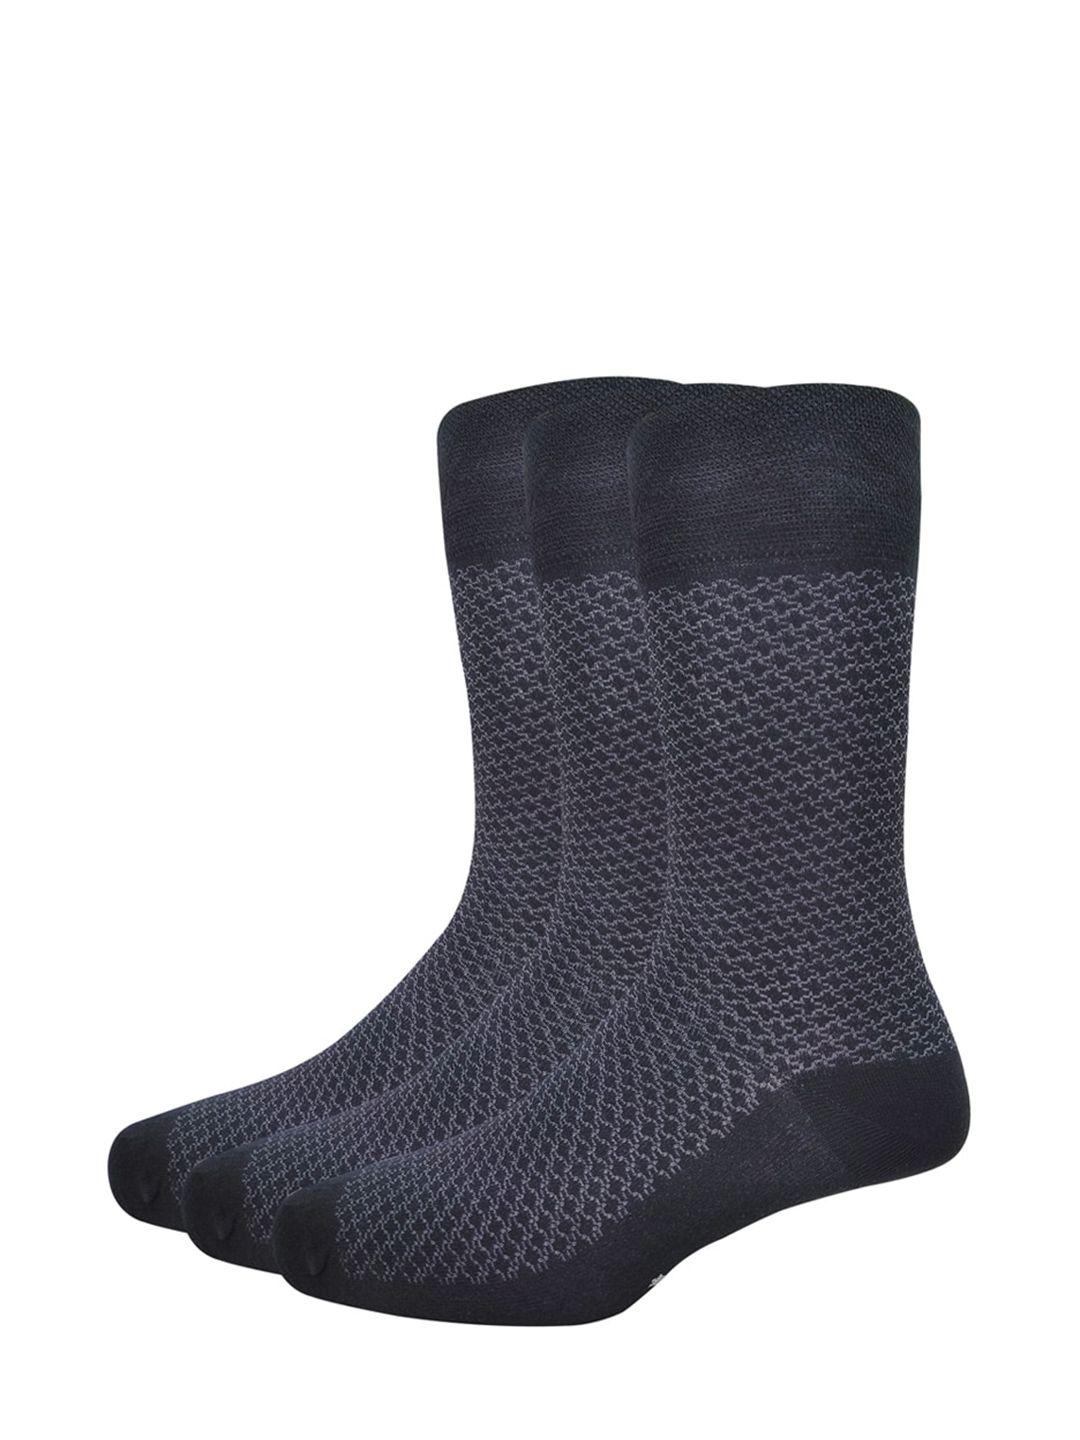 louis philippe men pack of 3 patterned calf-length socks